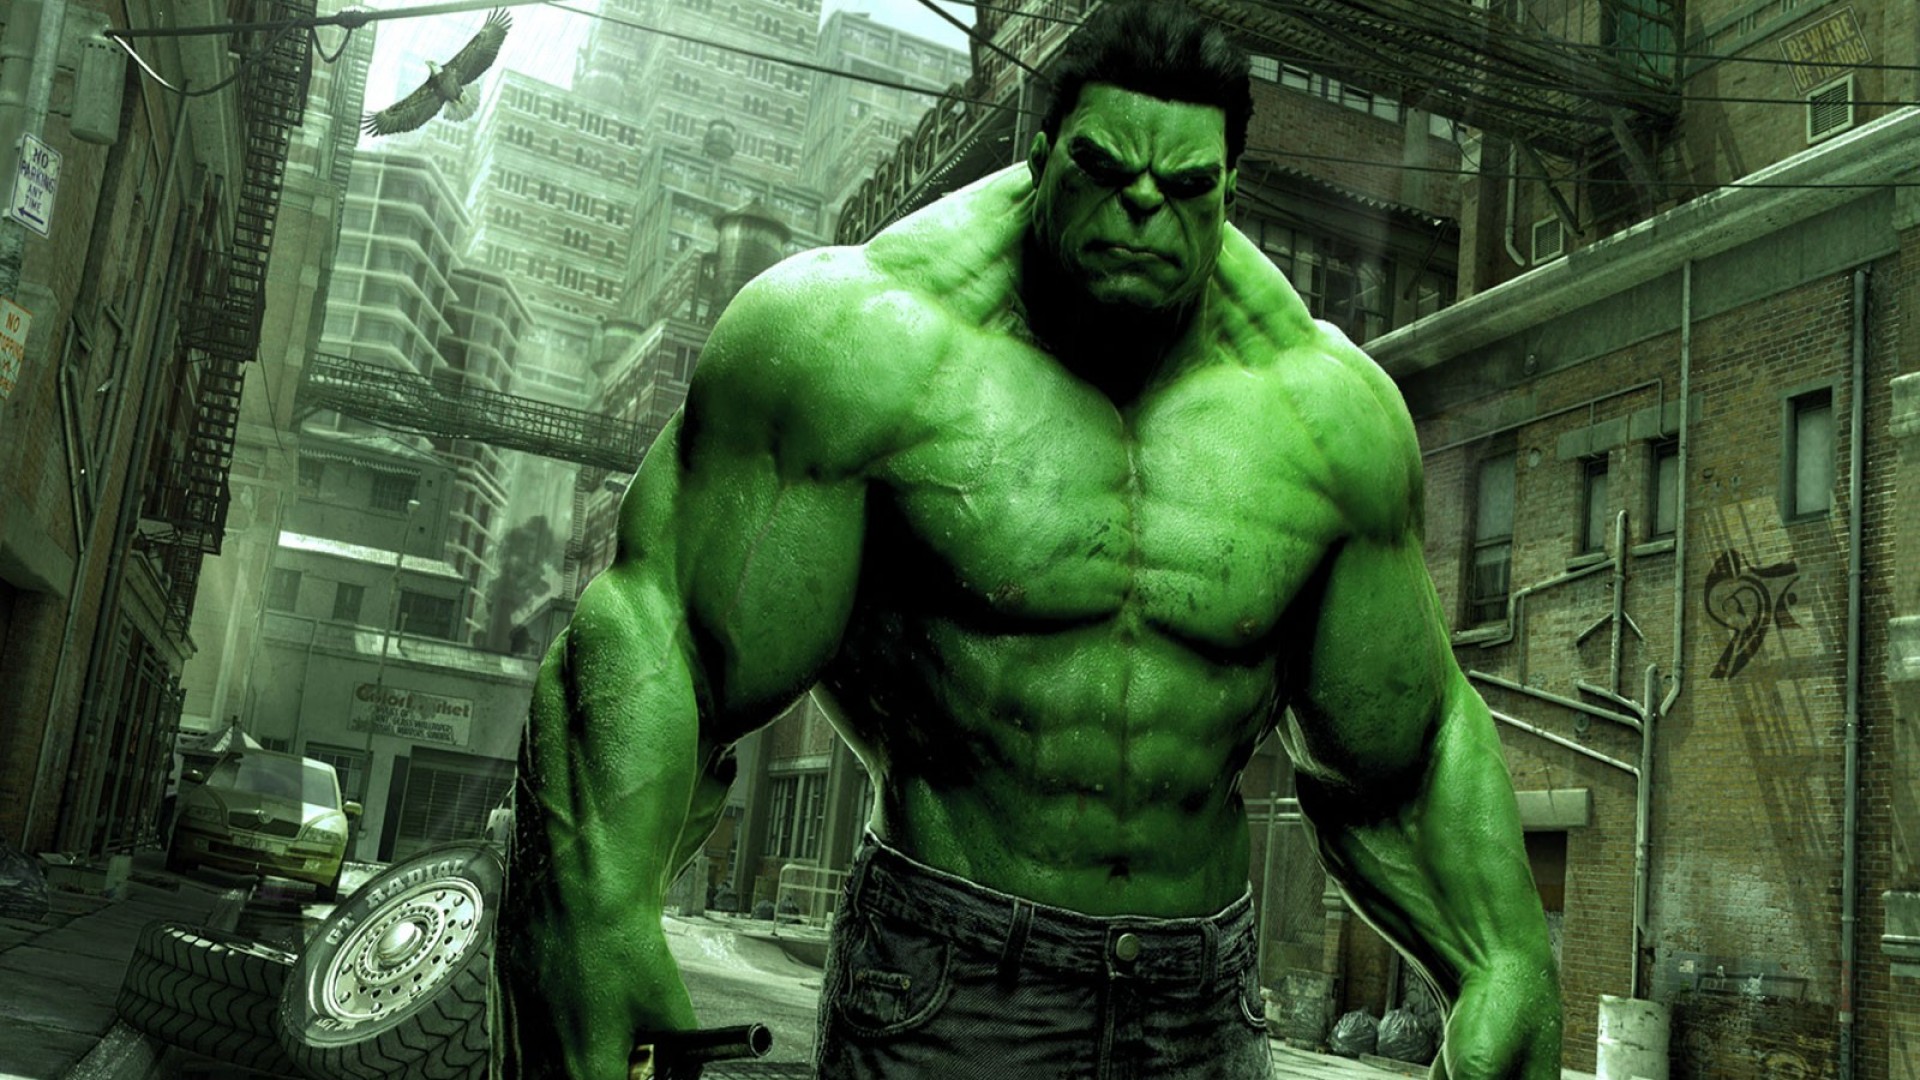 HD Hulk Wallpaper Backgrounds download.